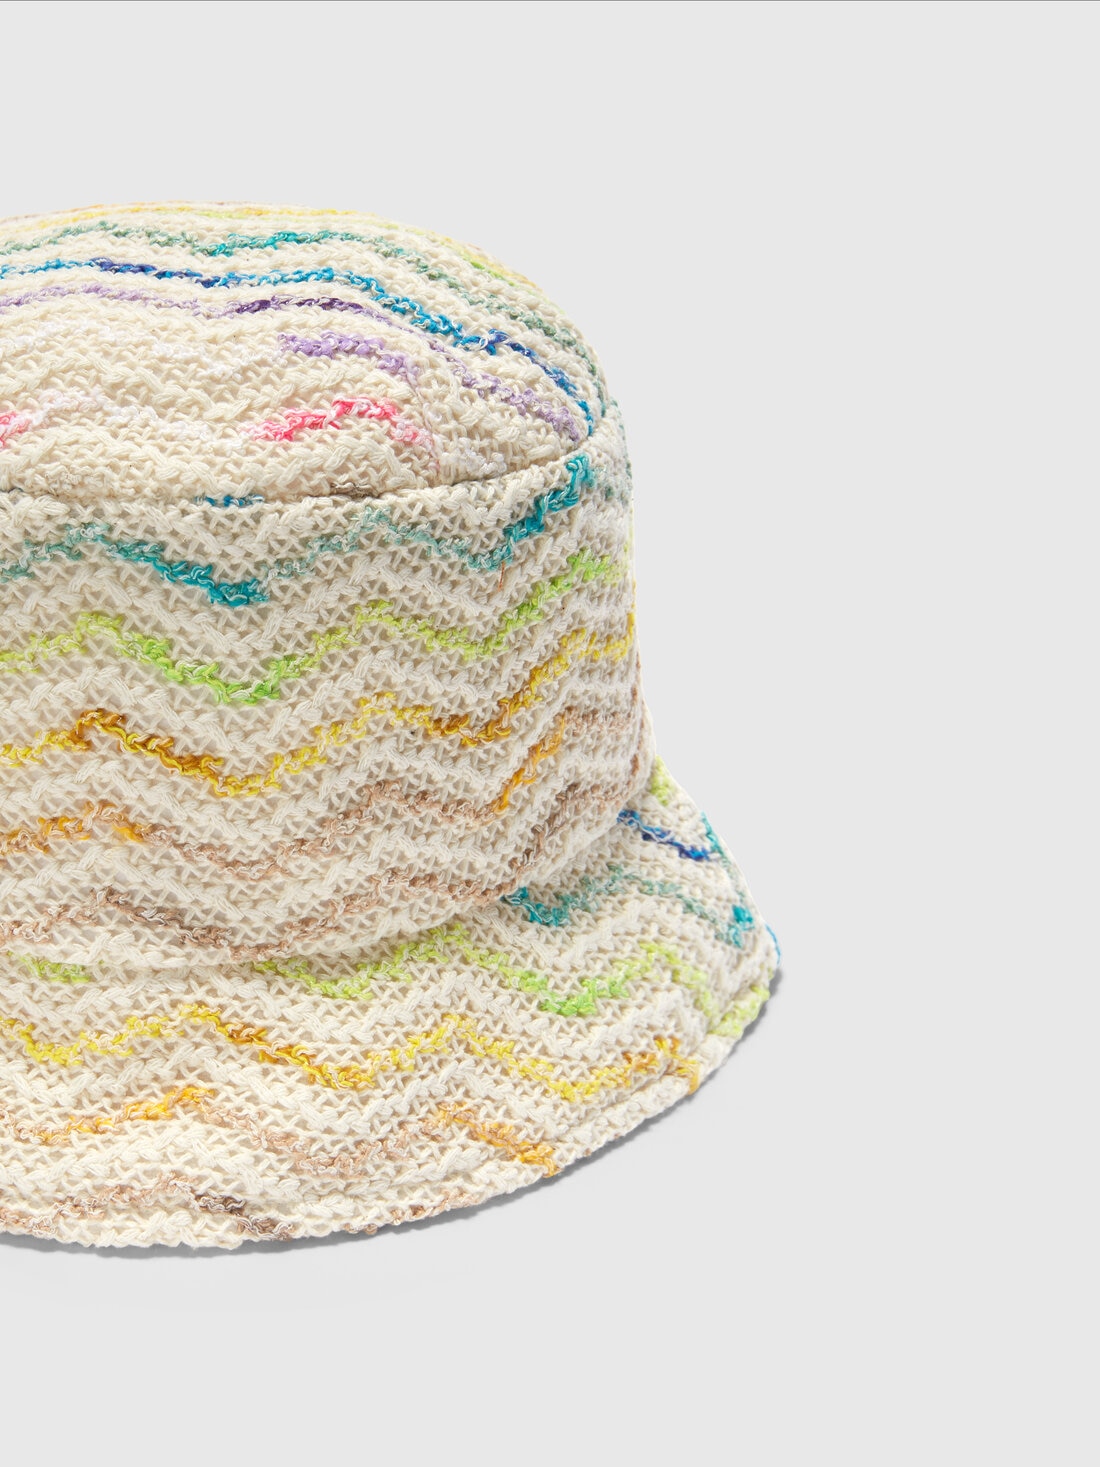 Cotton blend chevron knit bucket hat, Multicoloured  - 8053147140735 - 1